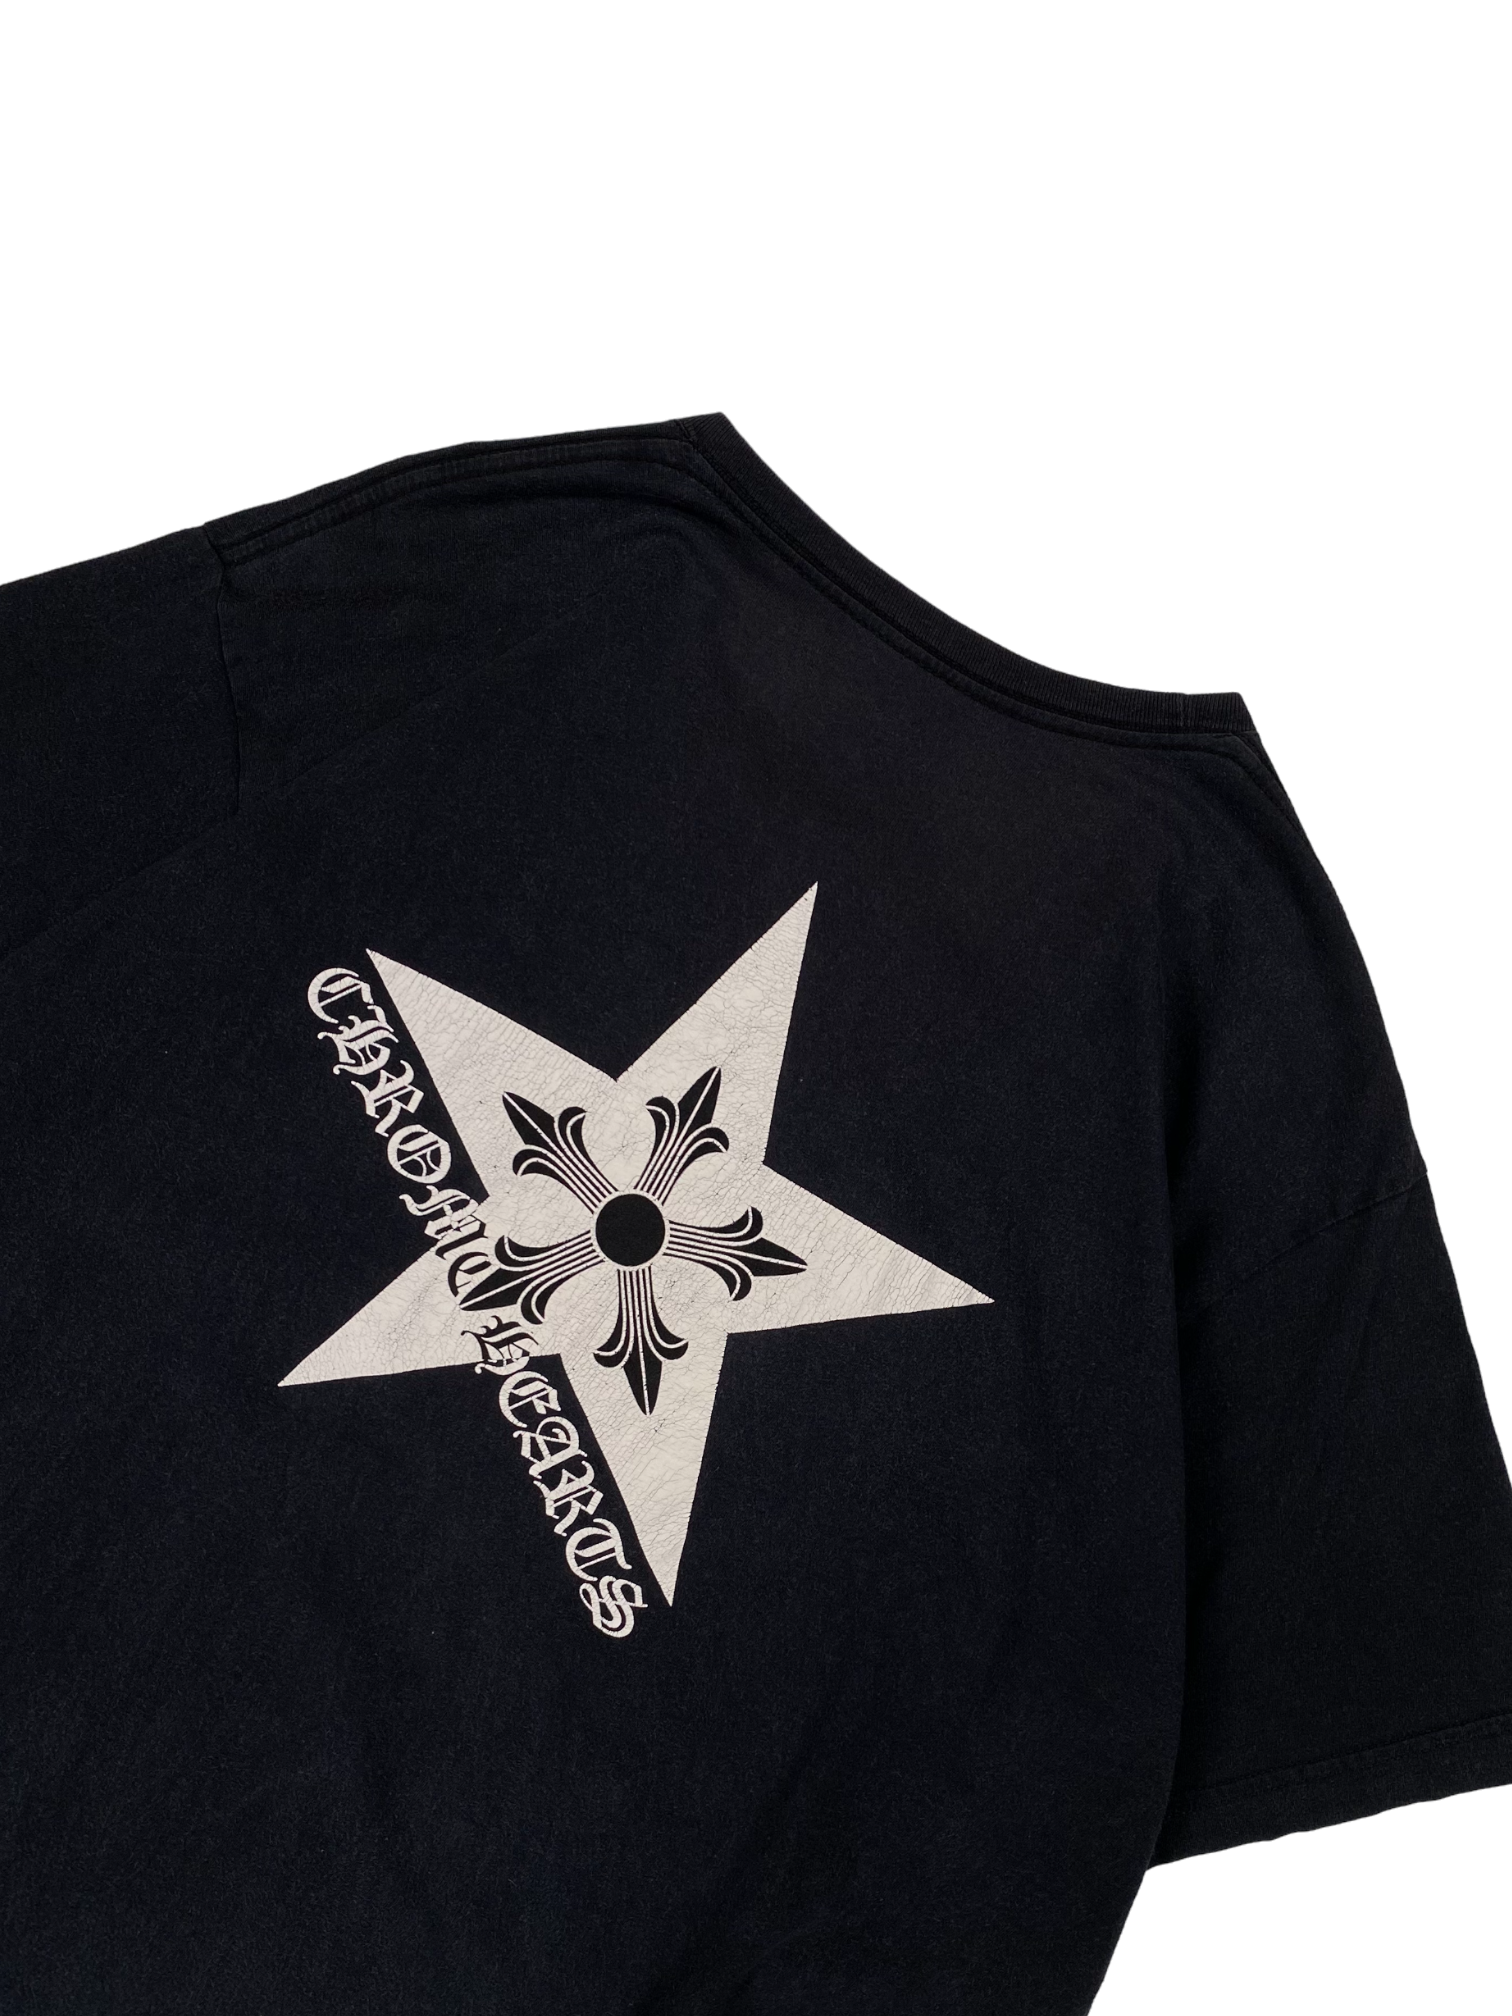 Chrome Hearts Black Star Logo Tee